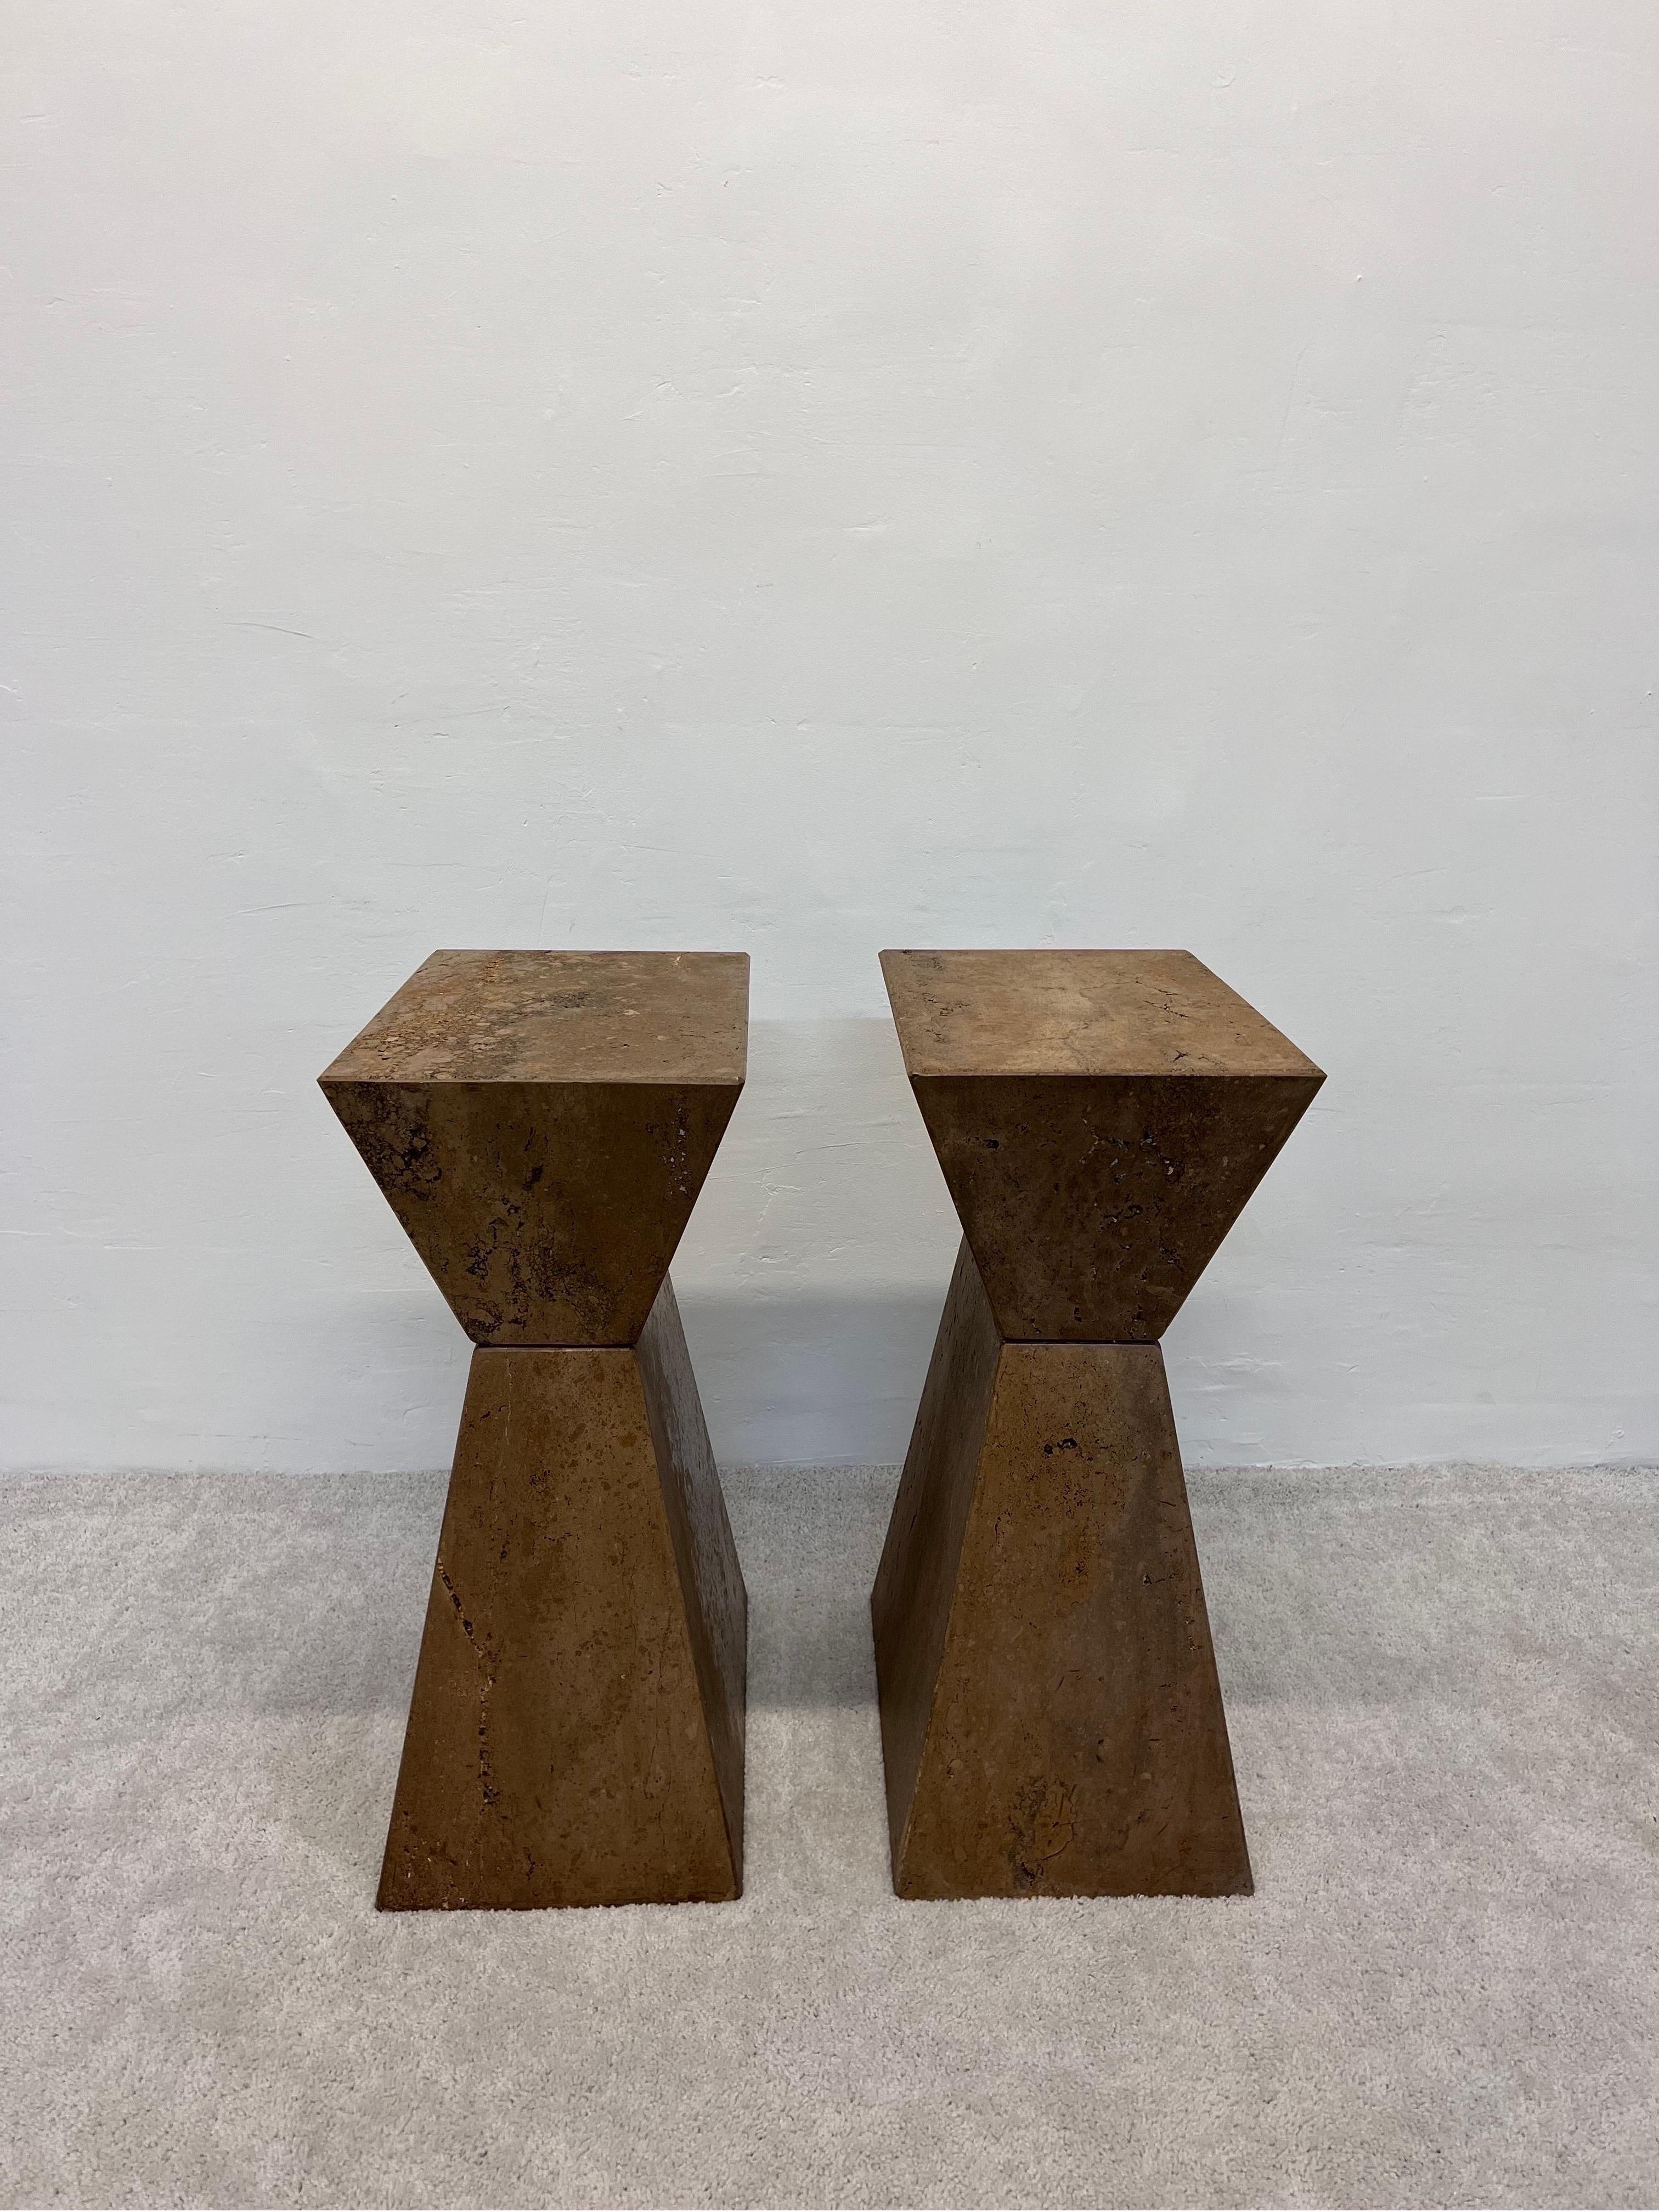 20th Century Geometric Faceted Italian Travertine Pedestal Tables, a Pair